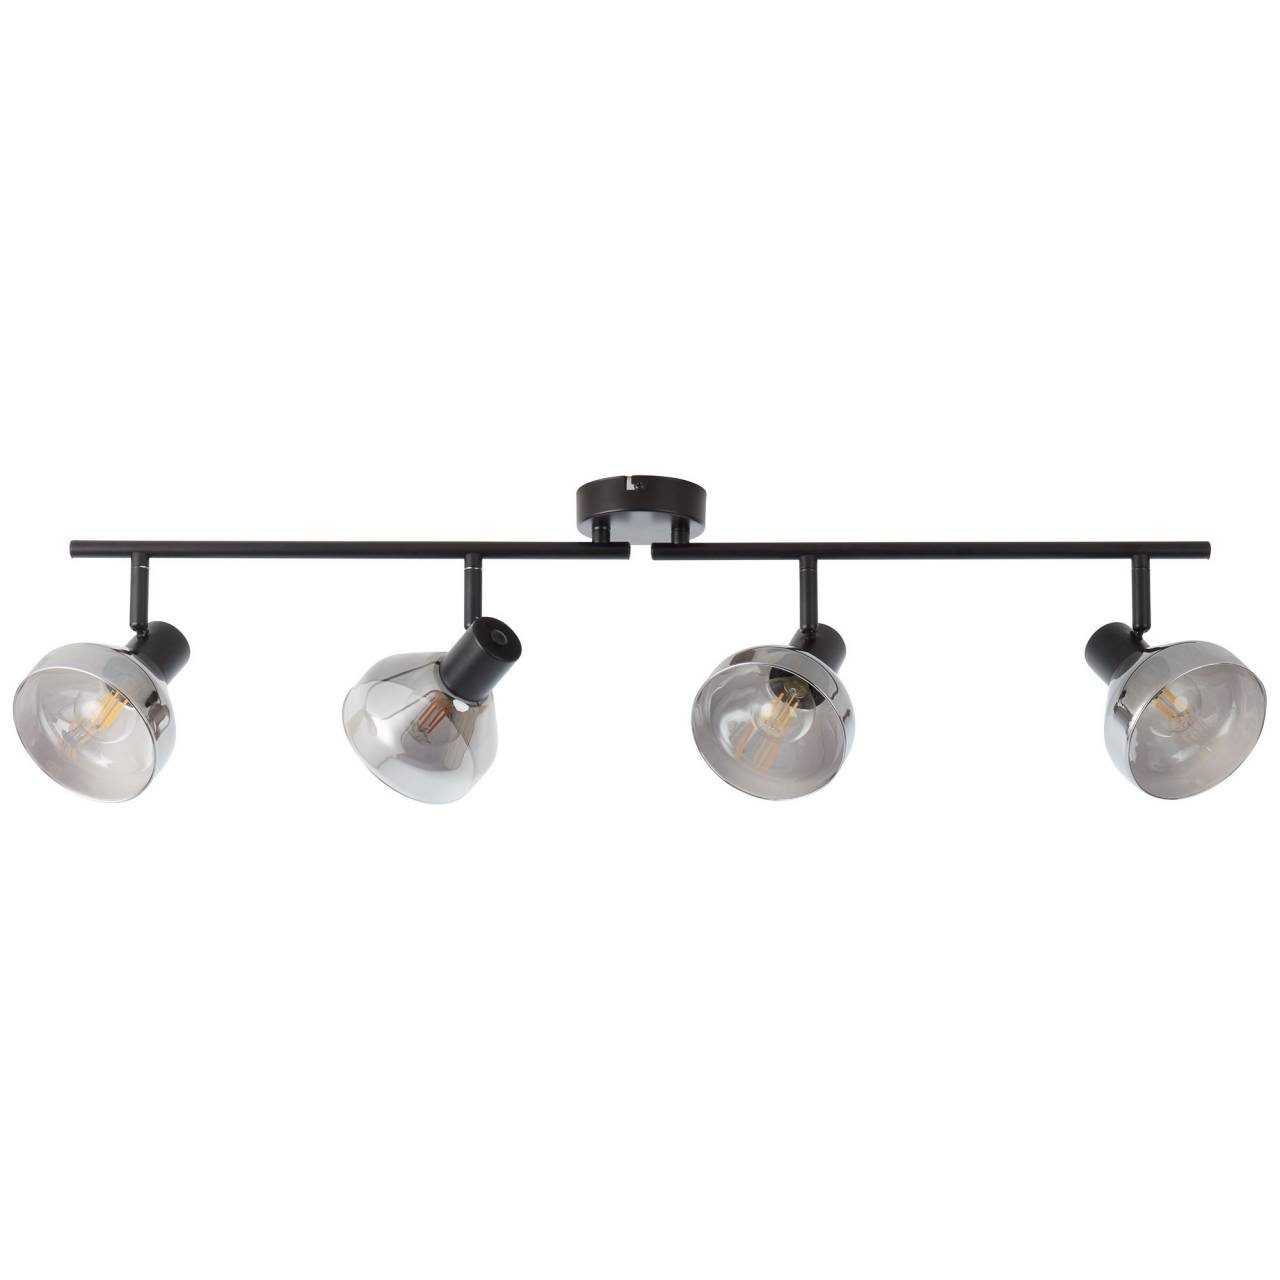 Lampe E14, schwarzmatt/rauchglas D45, 4flg 4x Deckenleuchte Reflekt, Spotrohr Reflekt 18W Brilliant